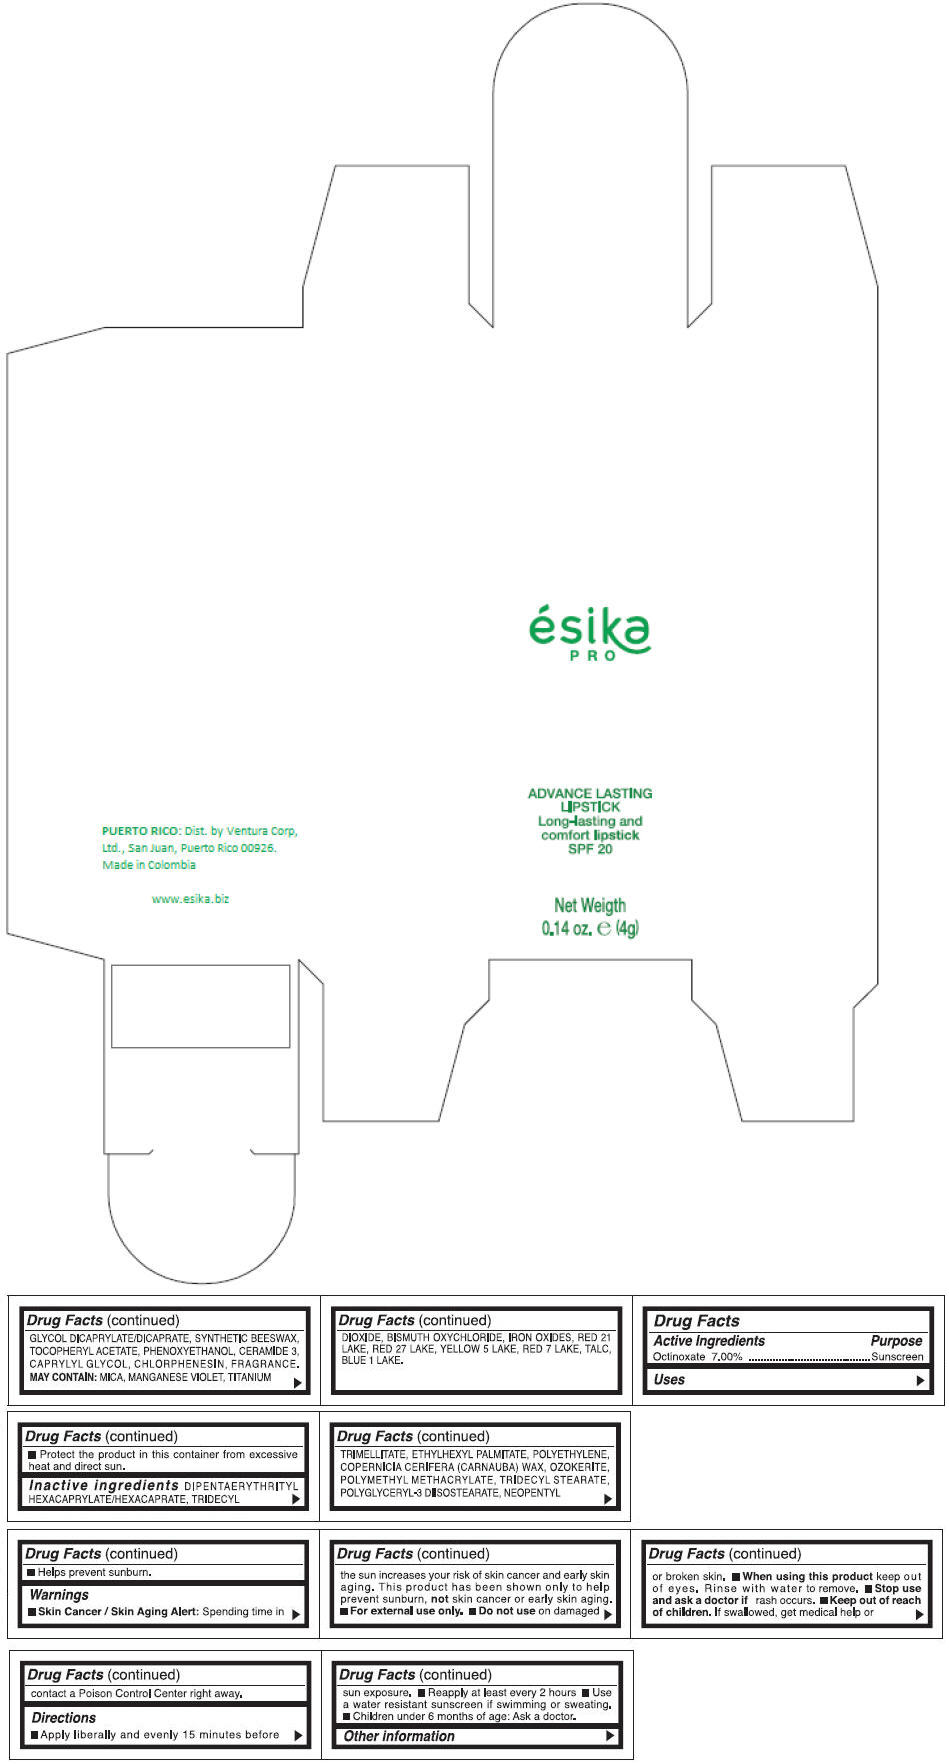 PRINCIPAL DISPLAY PANEL - 4 g Tube Box - (BORGOÑA SWEET) - PINK